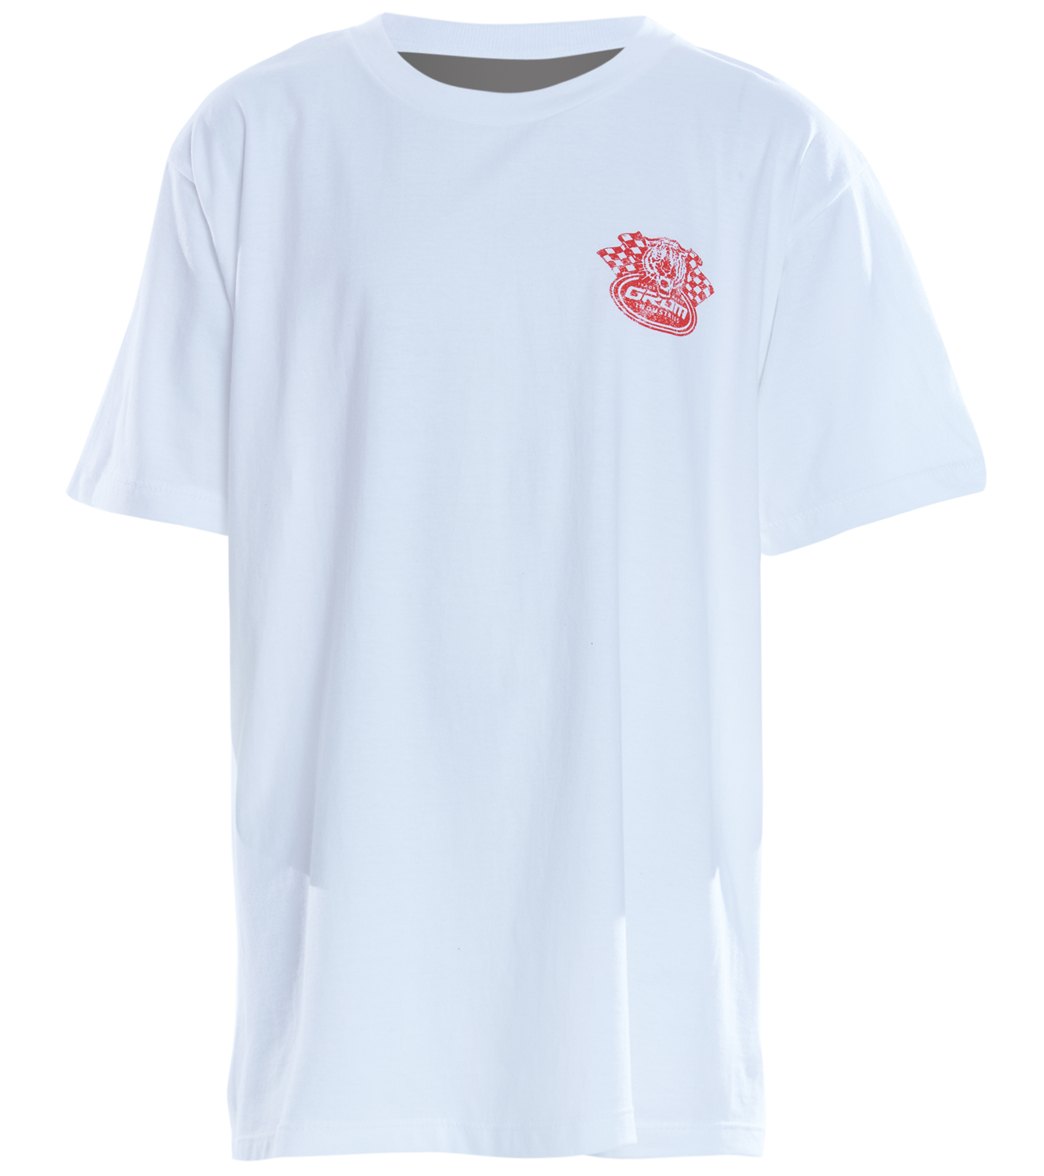 Grom Boys' Tiger Tee Shirt - White Xxl 18-20 Cotton - Swimoutlet.com